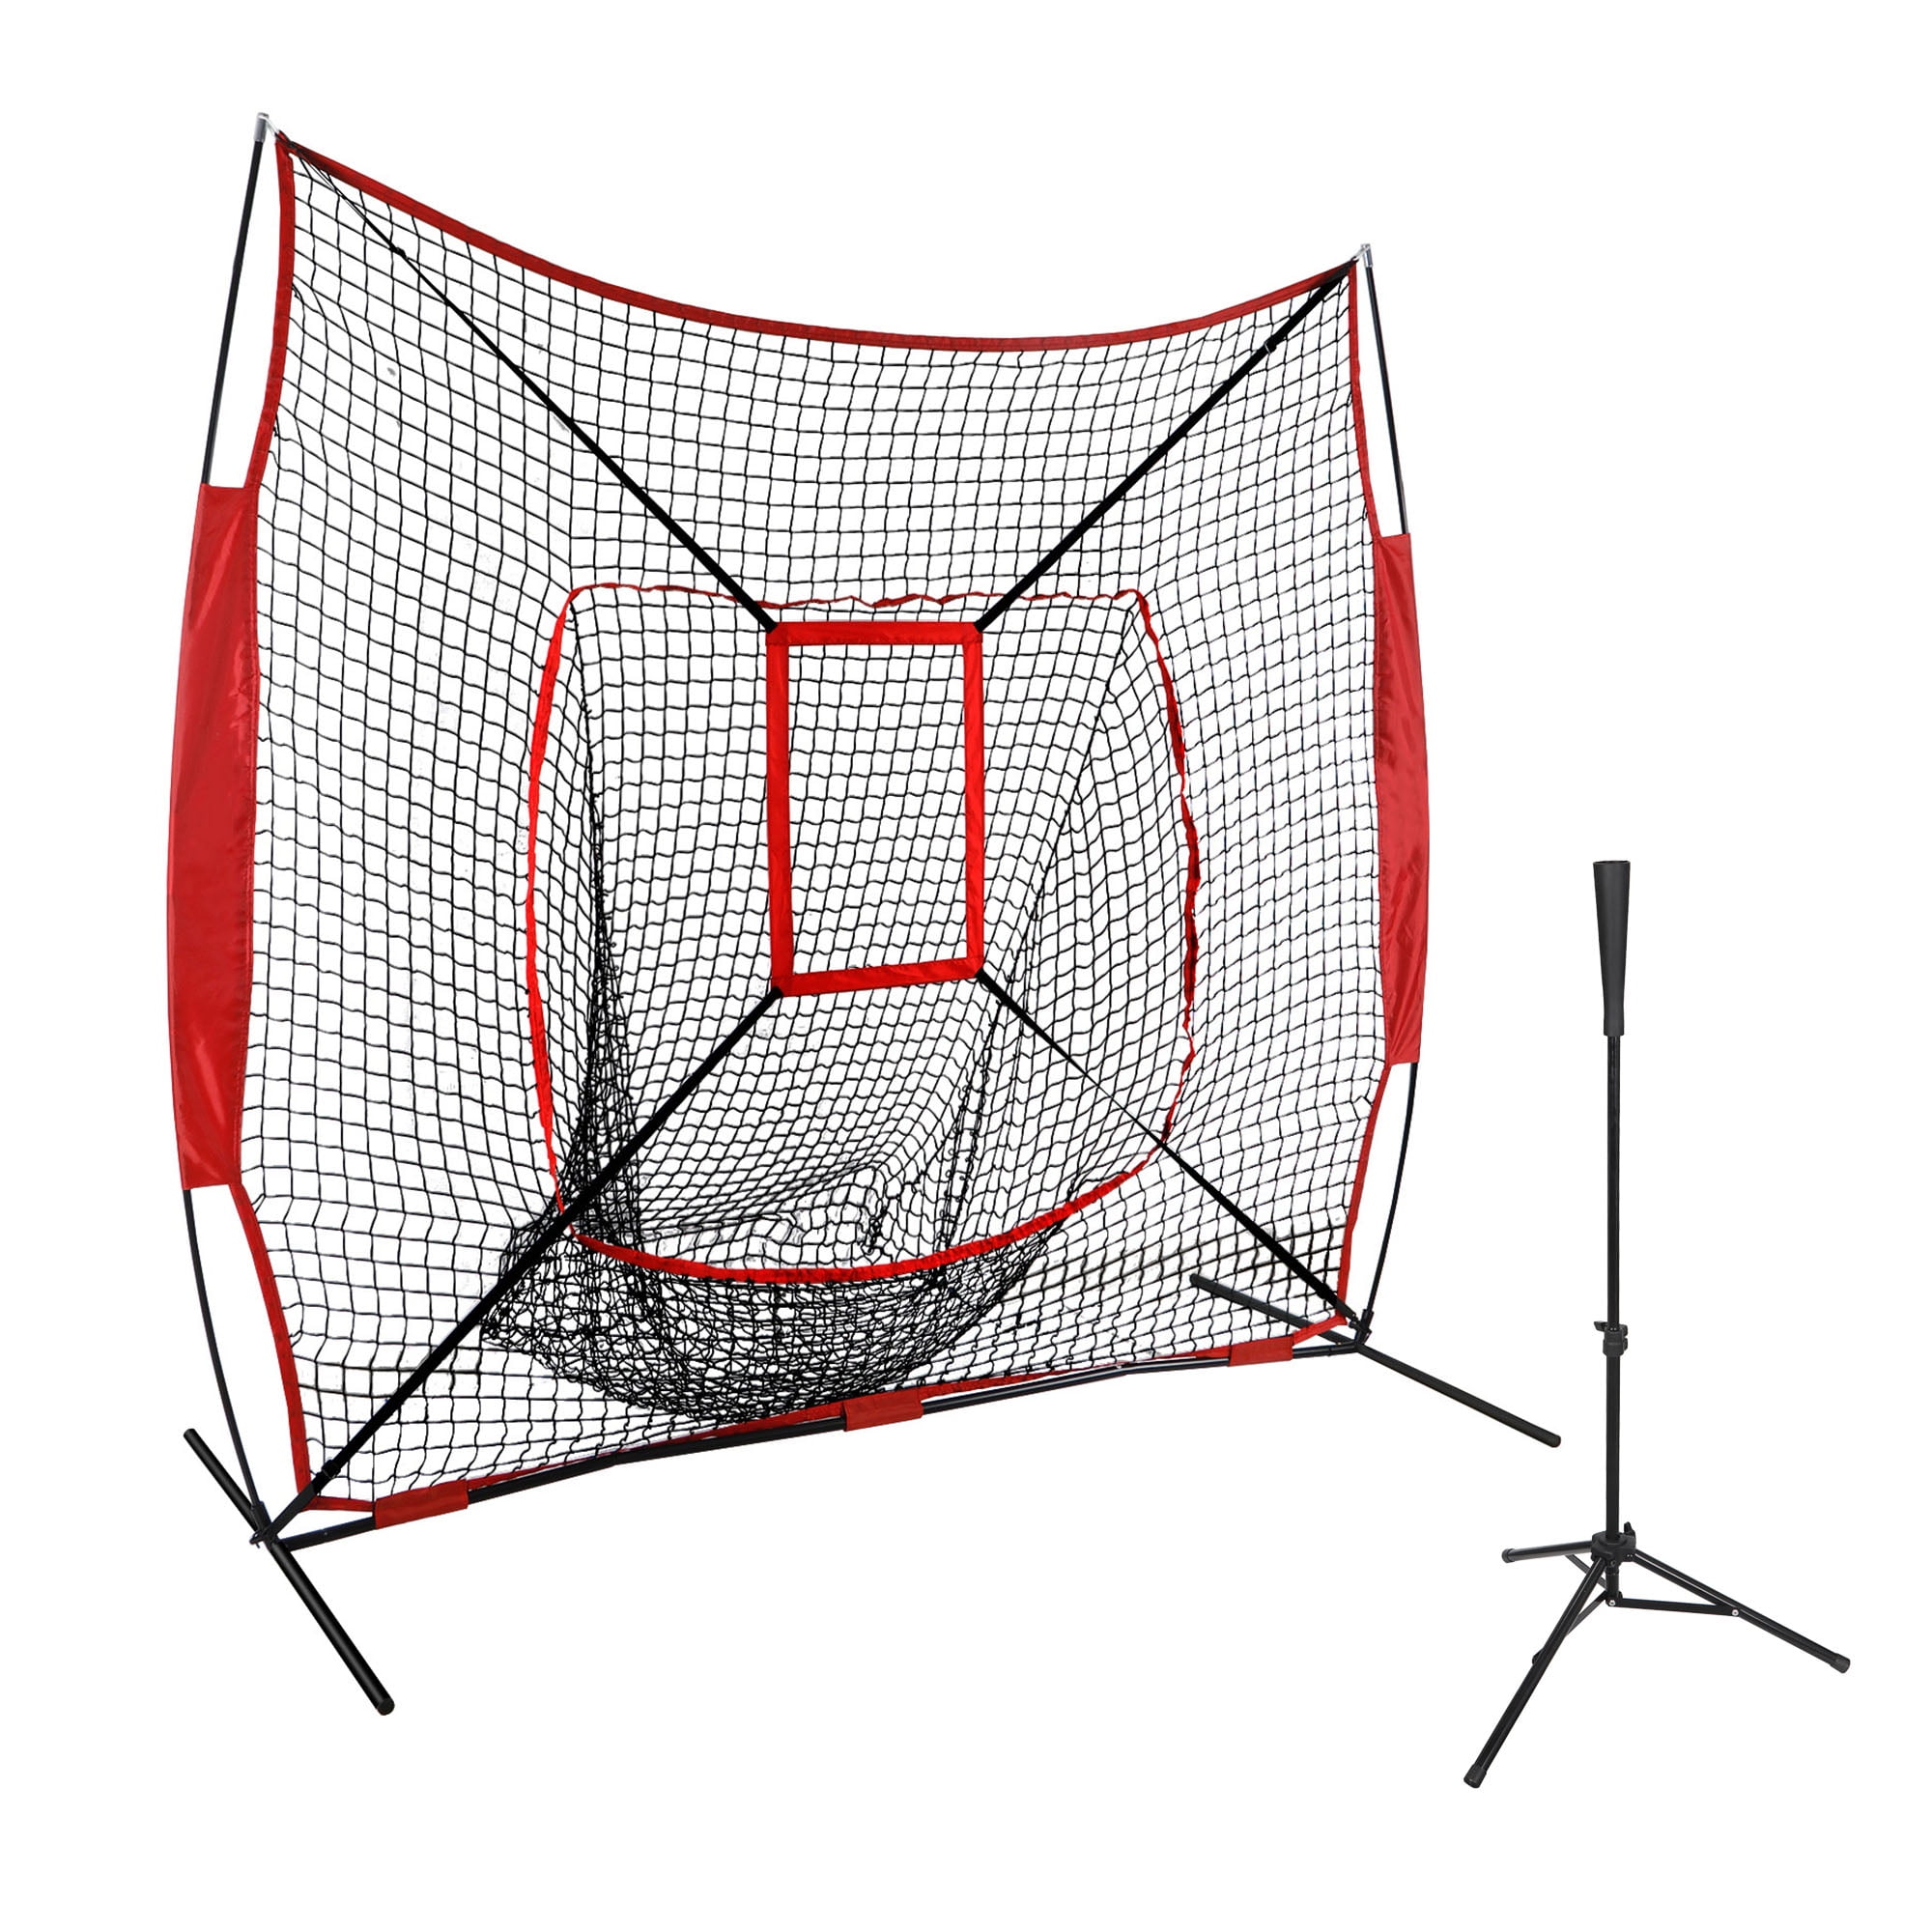 7'×7' Pro-Style Batting Tee Baseball Softball Practice Net w/Bag and Bow Frame 